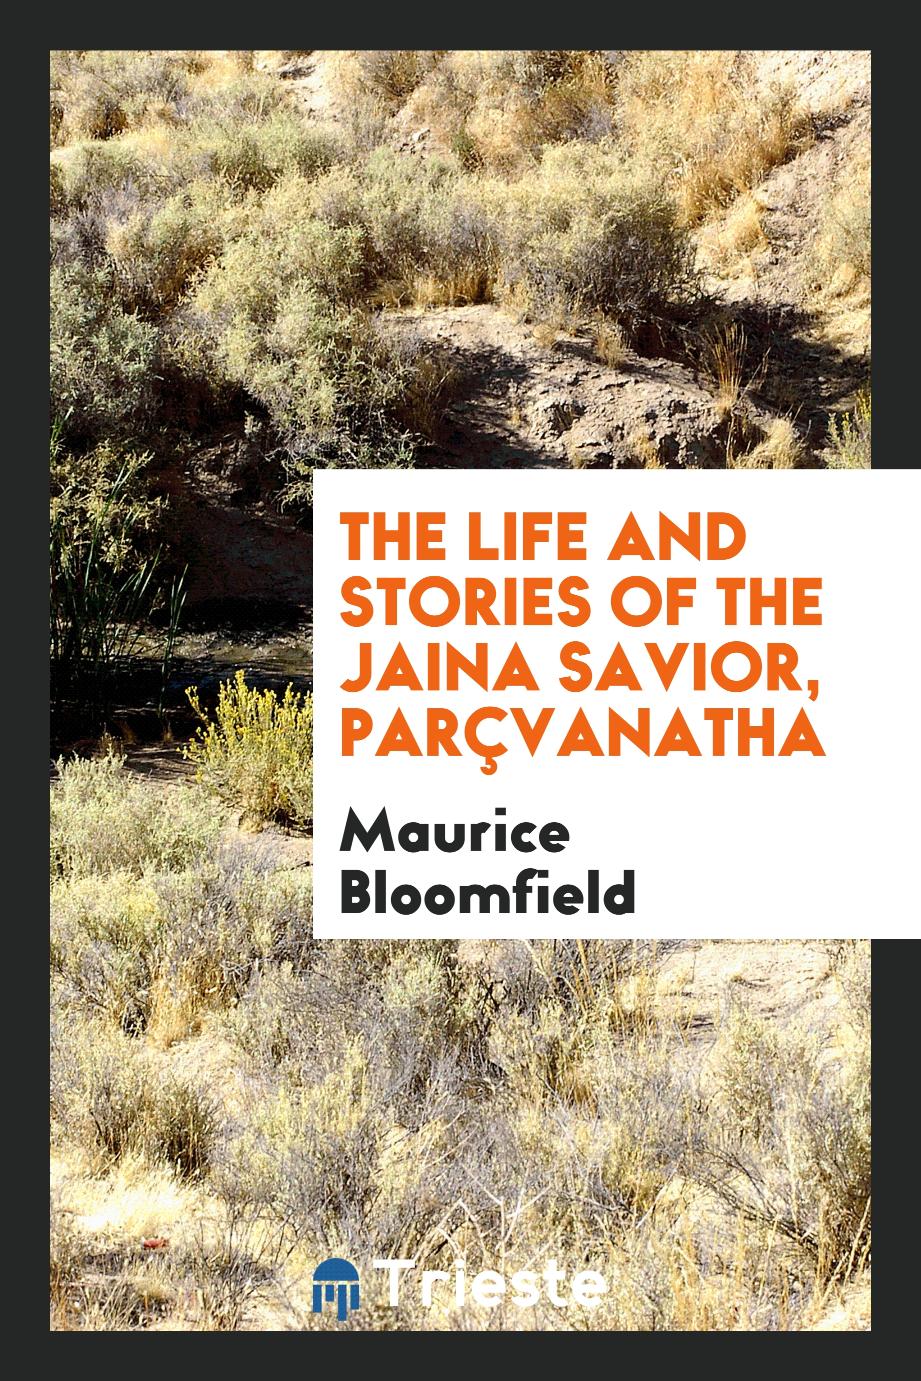 The life and stories of the Jaina savior, Parçvanatha